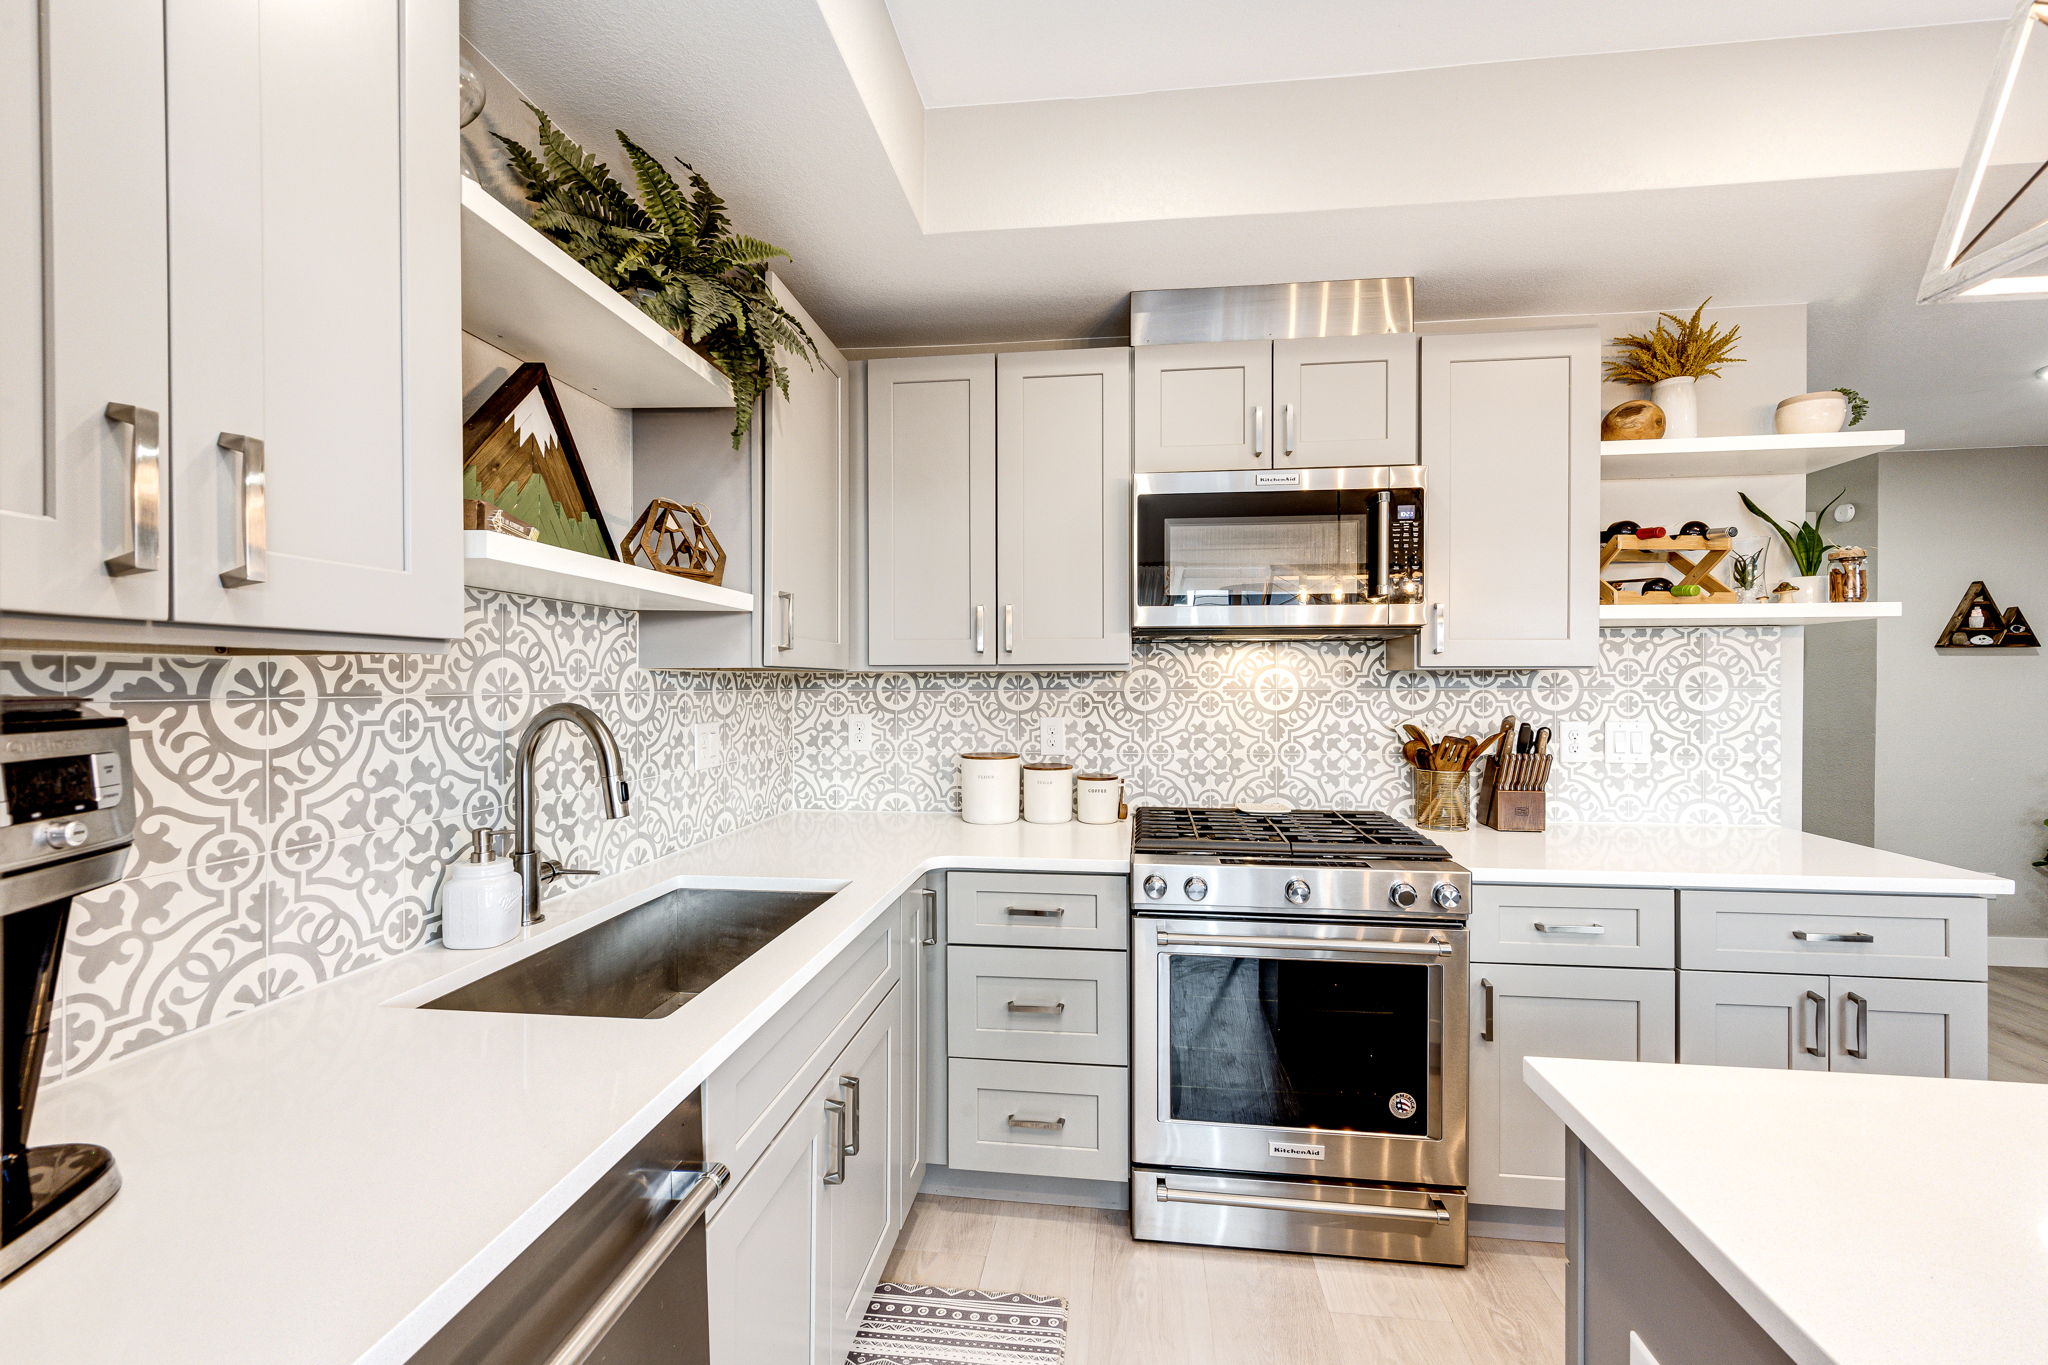 Kitchenaid appliances & custom tile backsplash